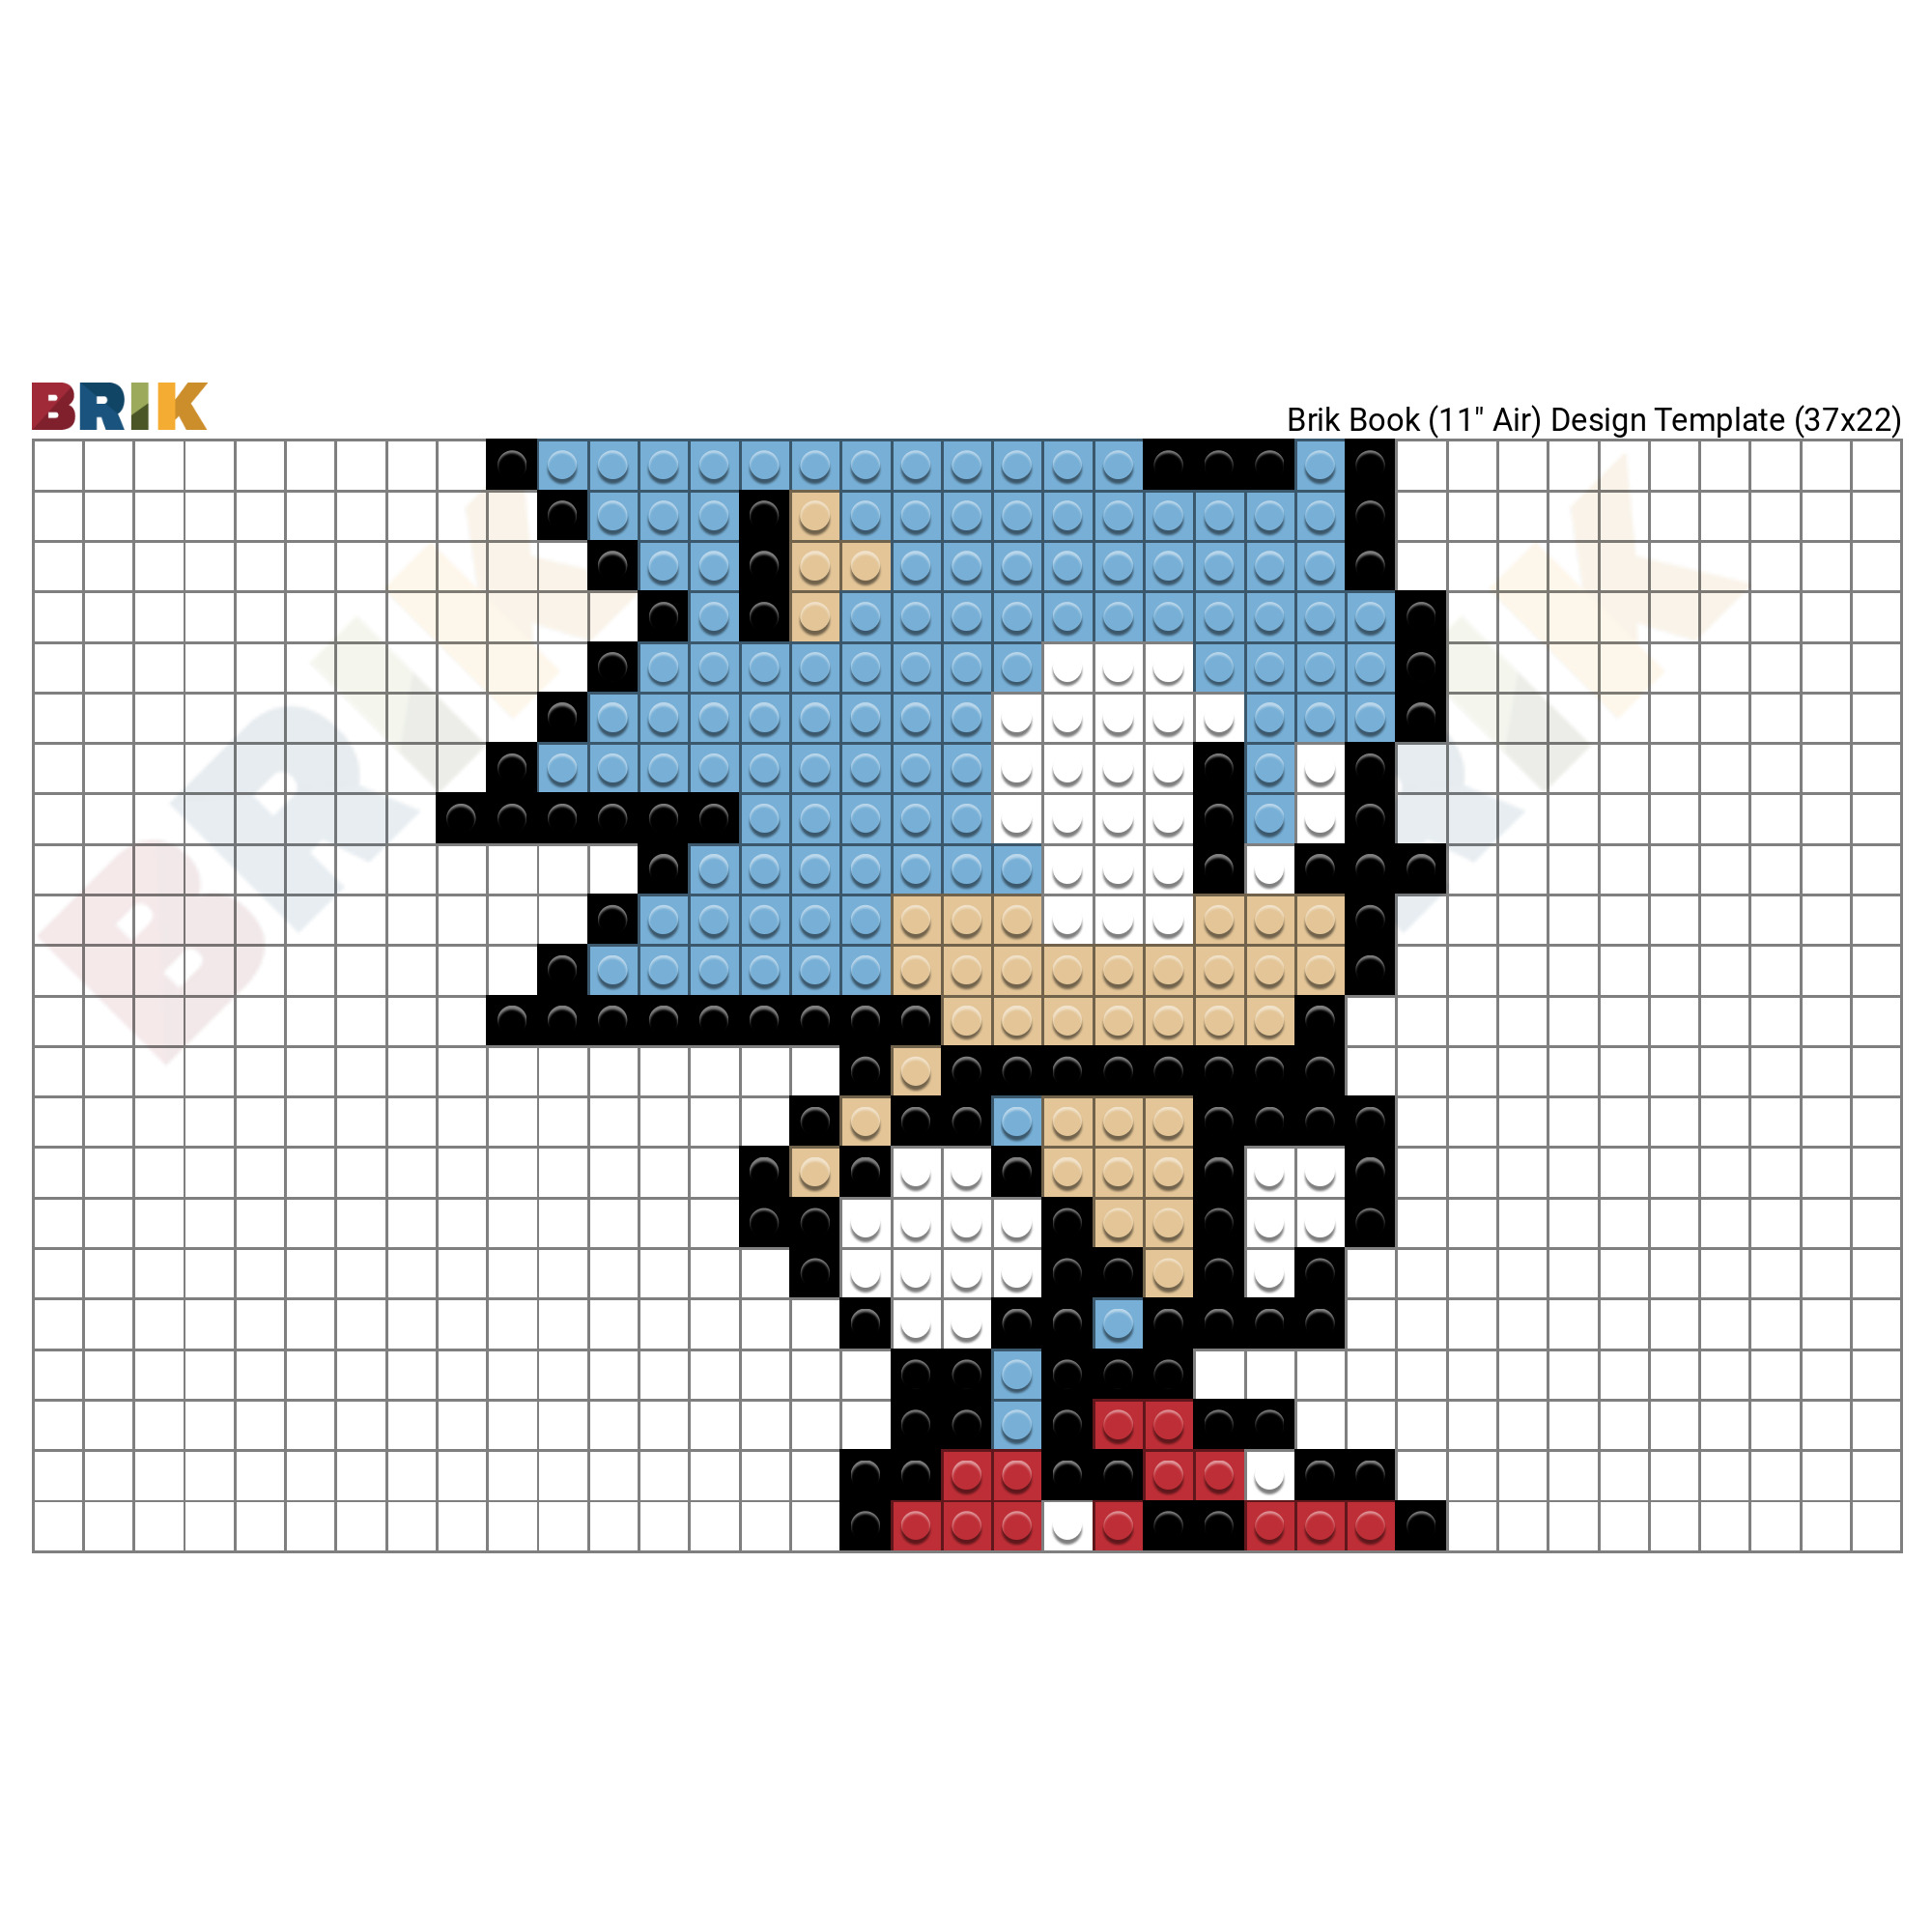 32x32 Sonic! by PixelKoko 💥